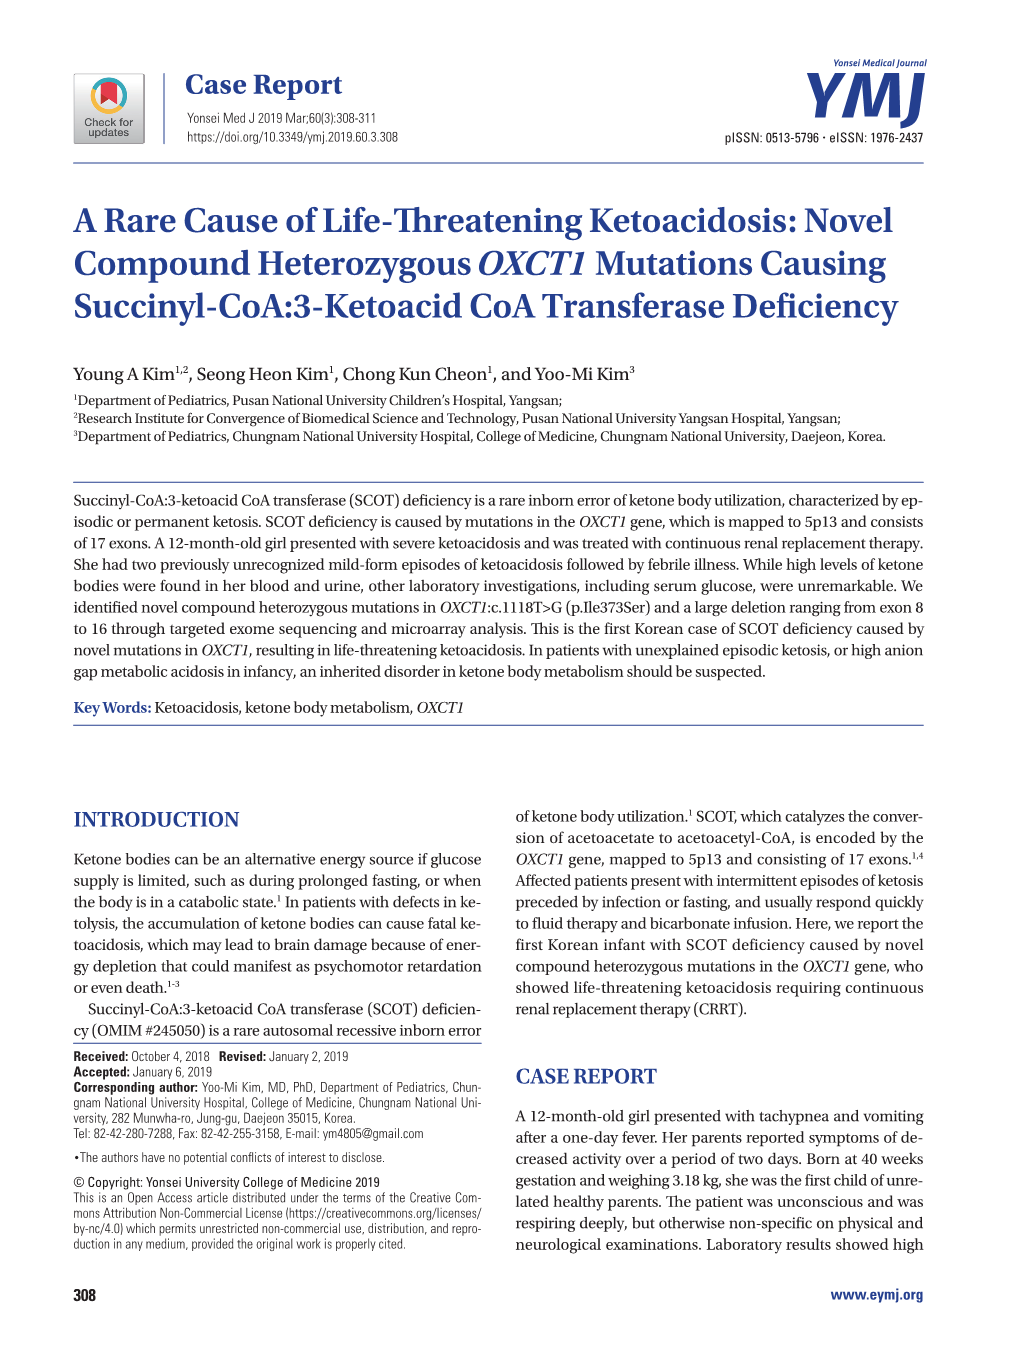 Novel Compound Heterozygous OXCT1 Mutations Causing Succinyl-Coa:3-Ketoacid Coa Transferase Deficiency